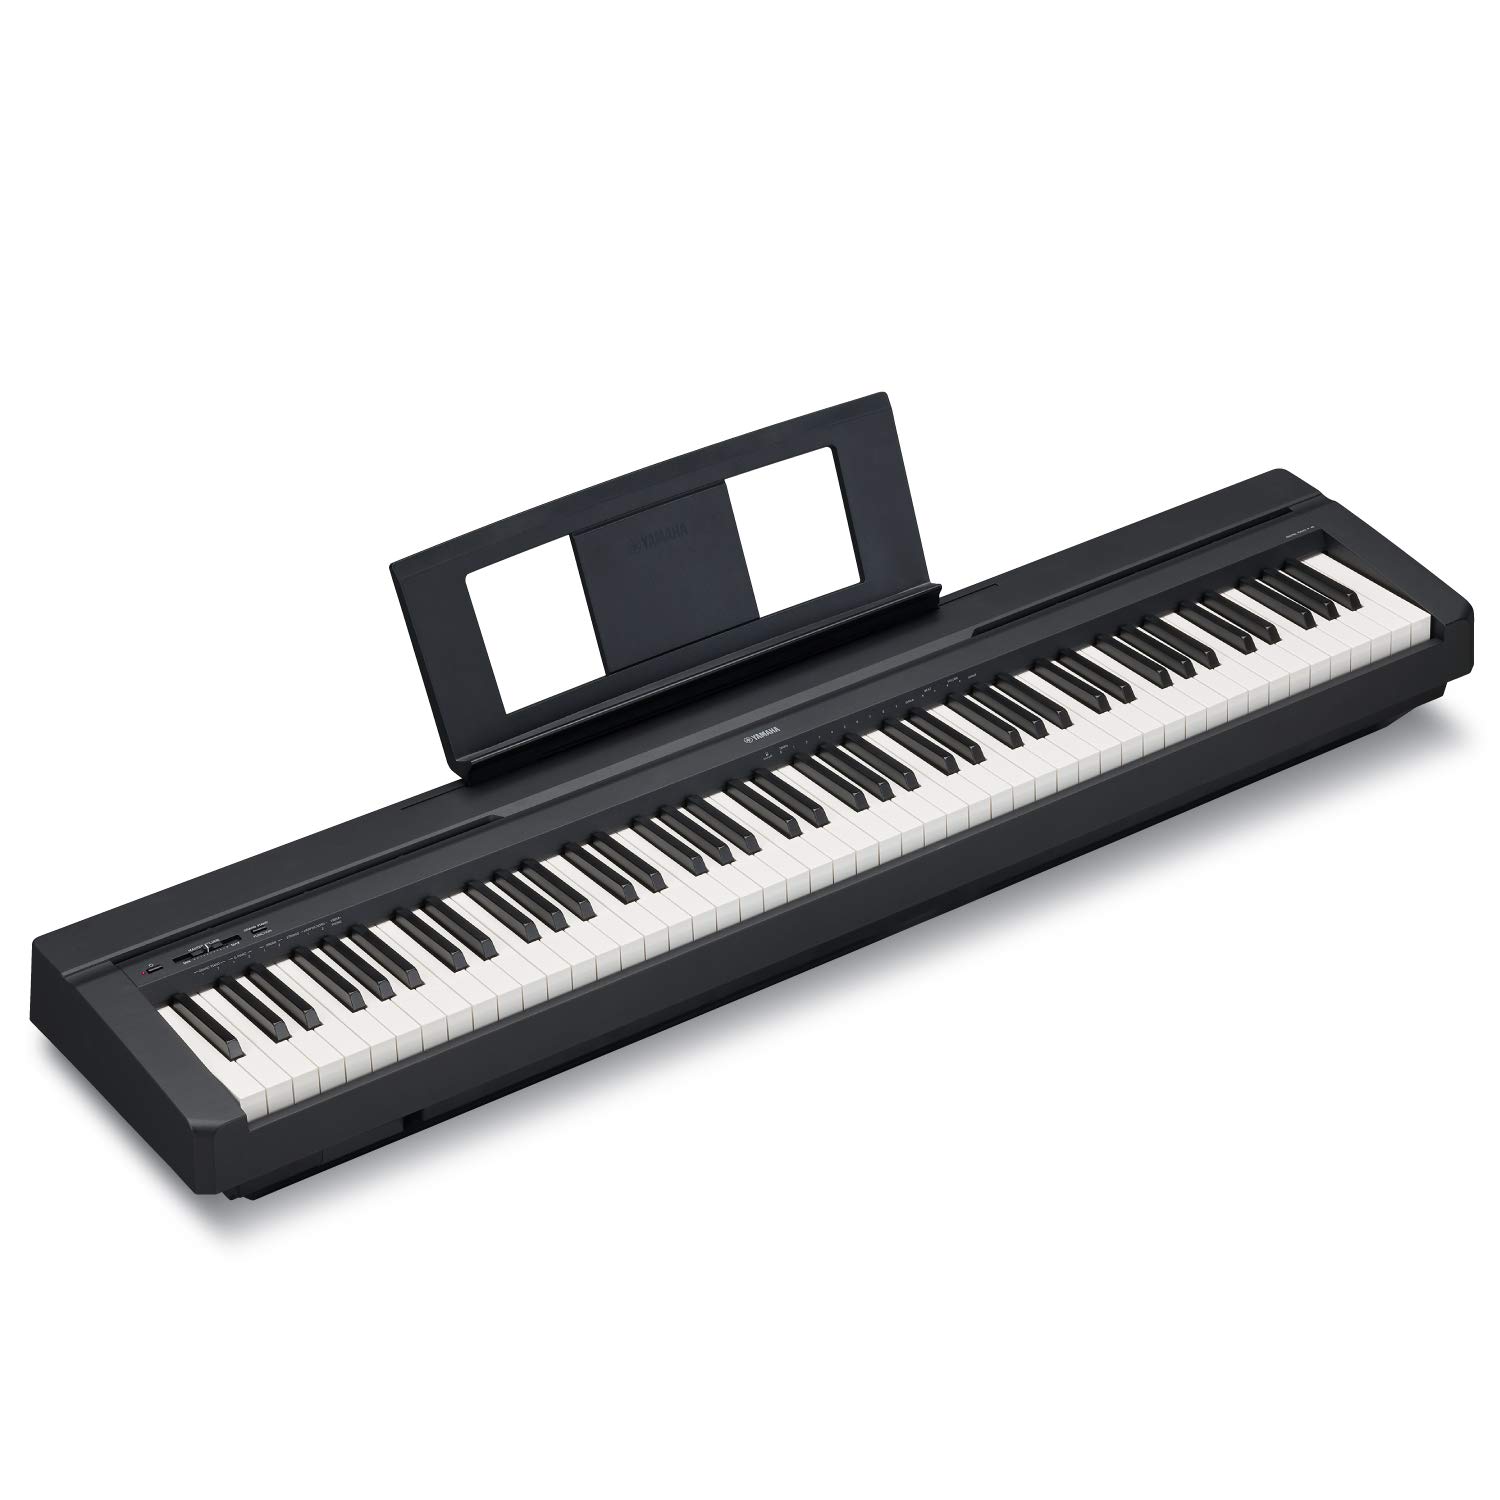 Piano Digital Yamaha P45b spa